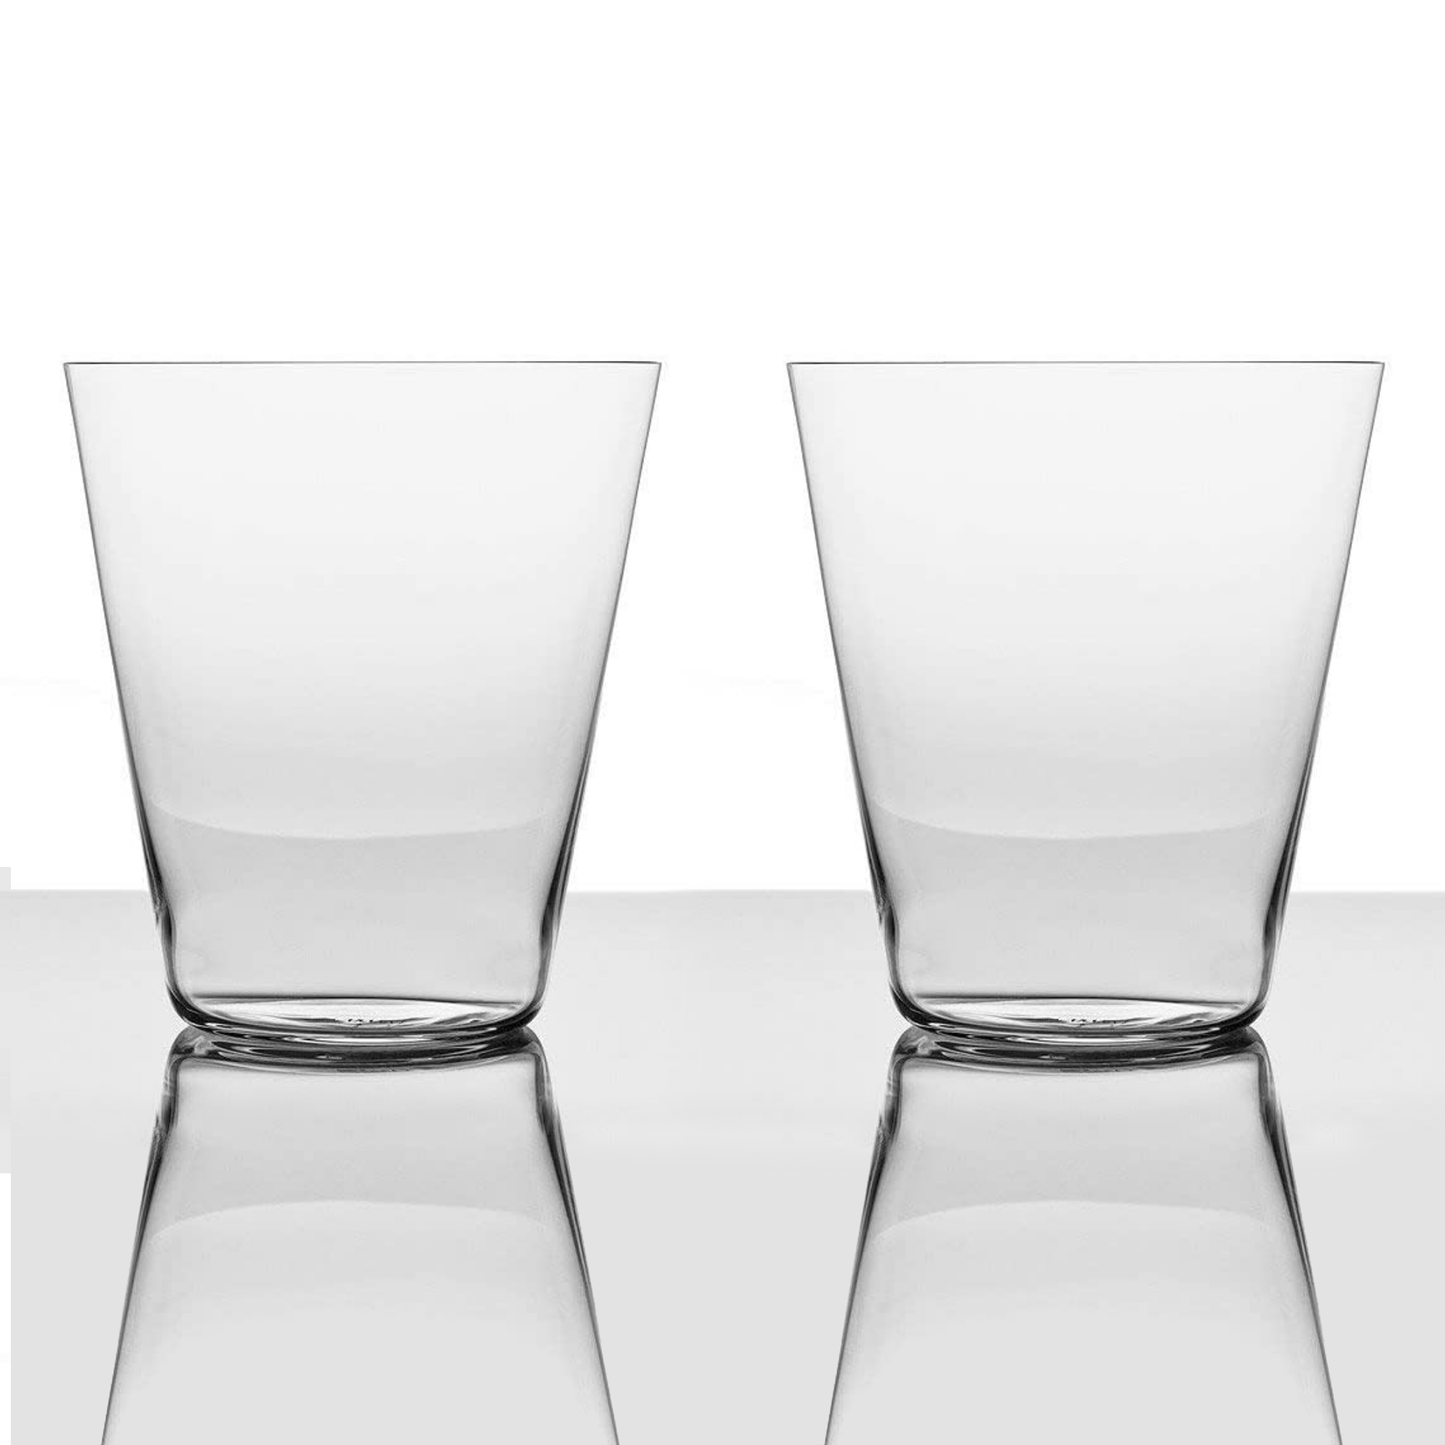 Zalto Denk'Art Cocktail / Tumbler Glass - 2 Glasses